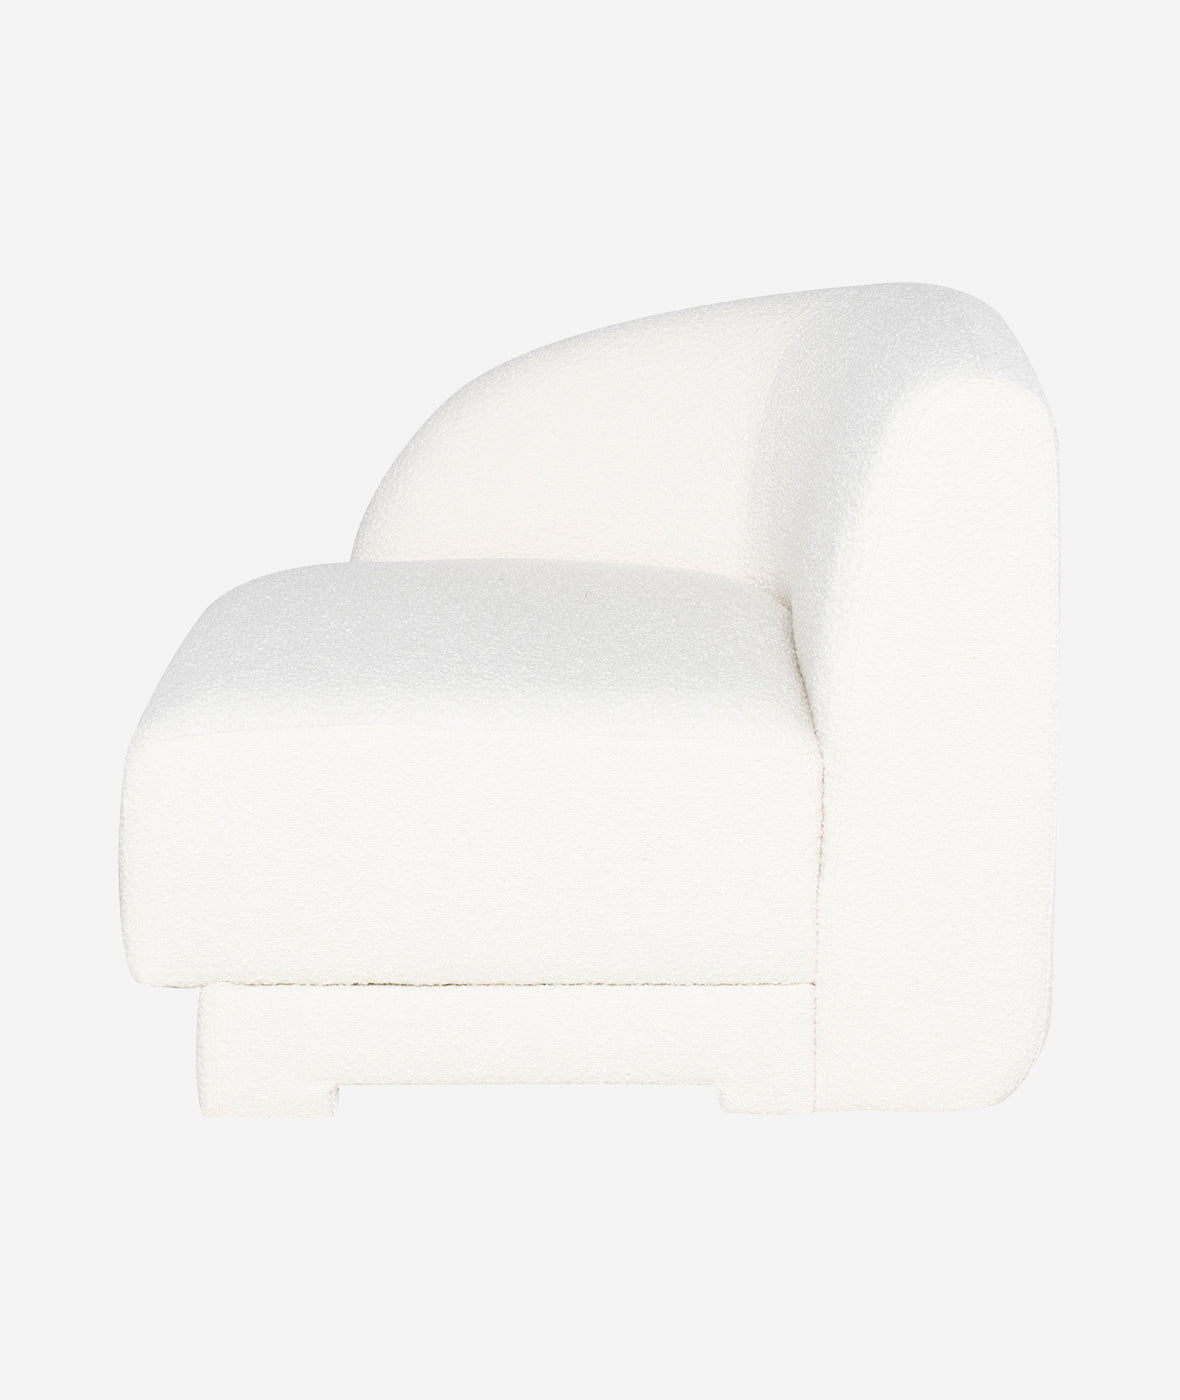 Seraphina Modular Arm Chair - More Options